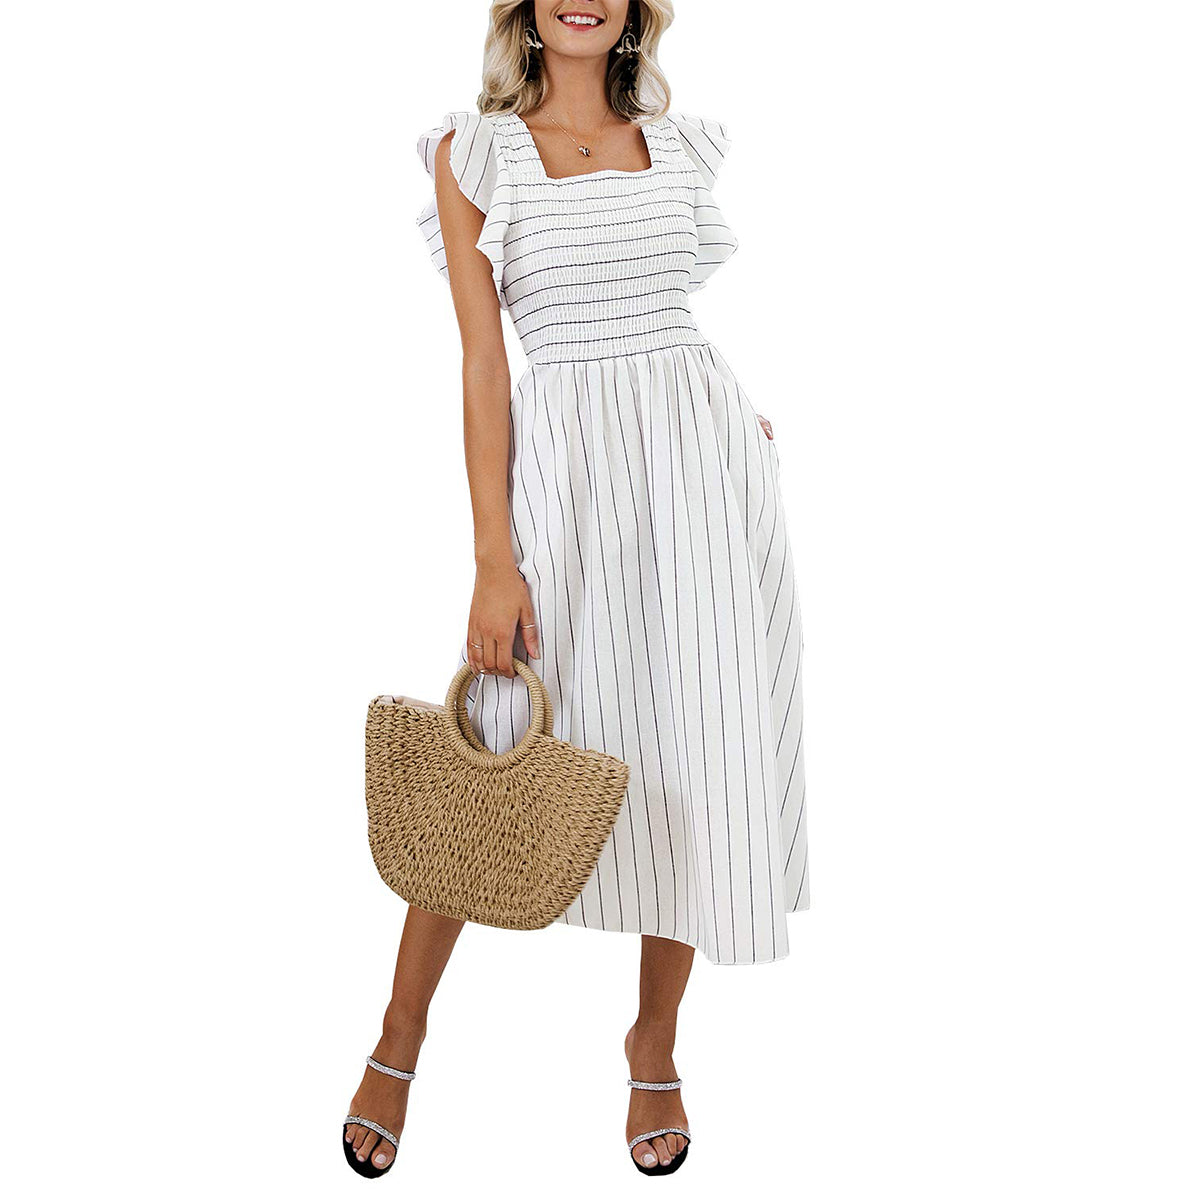 NTG Fad S / White Stripes Elegant Striped Cotton Linen Dress